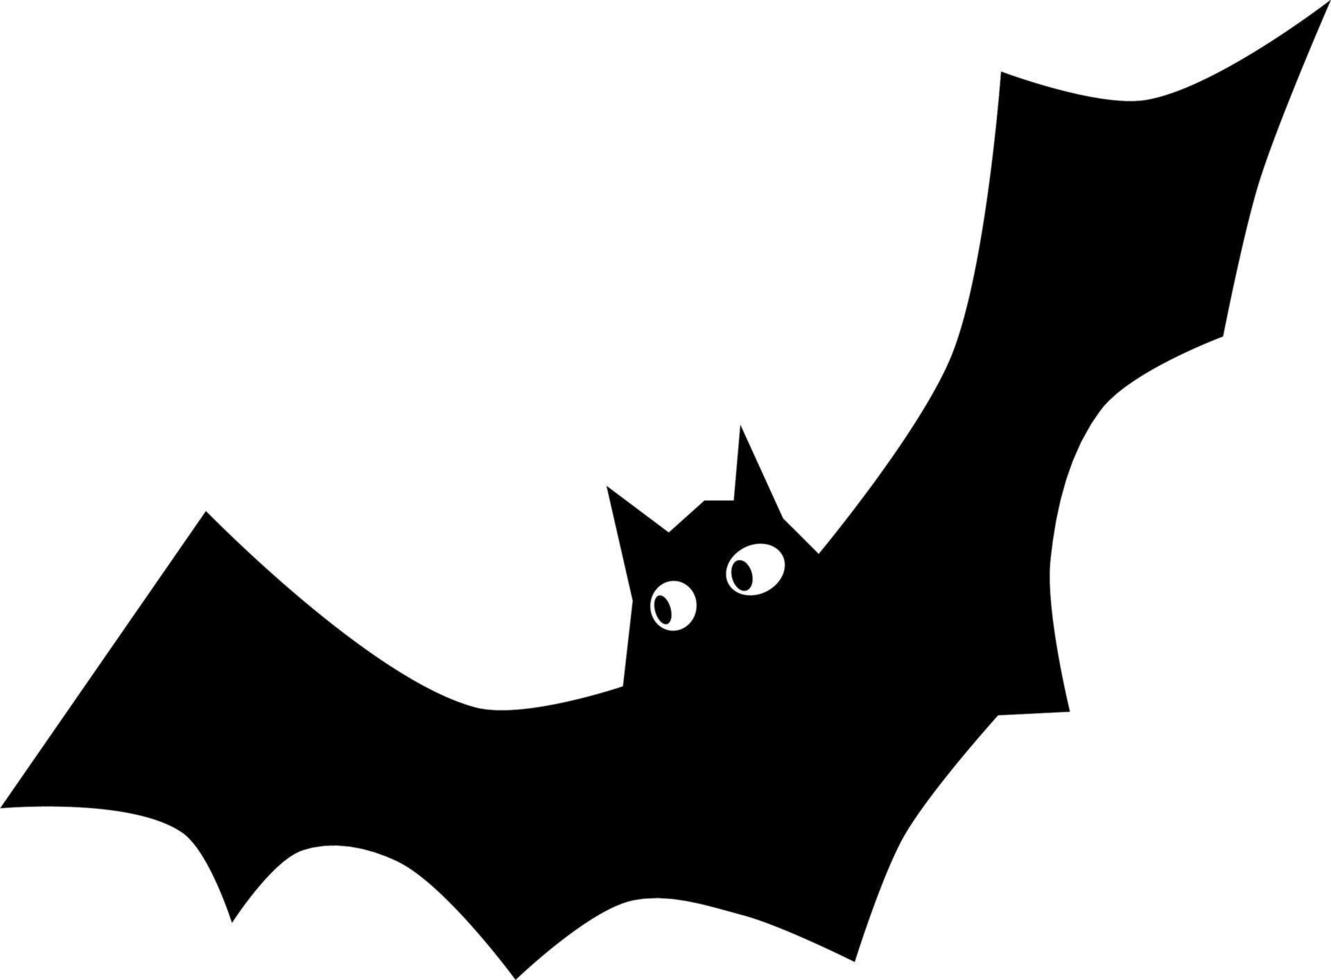 Cute halloween bat silhouette vector design isolated on white background. cartoon bat vector.